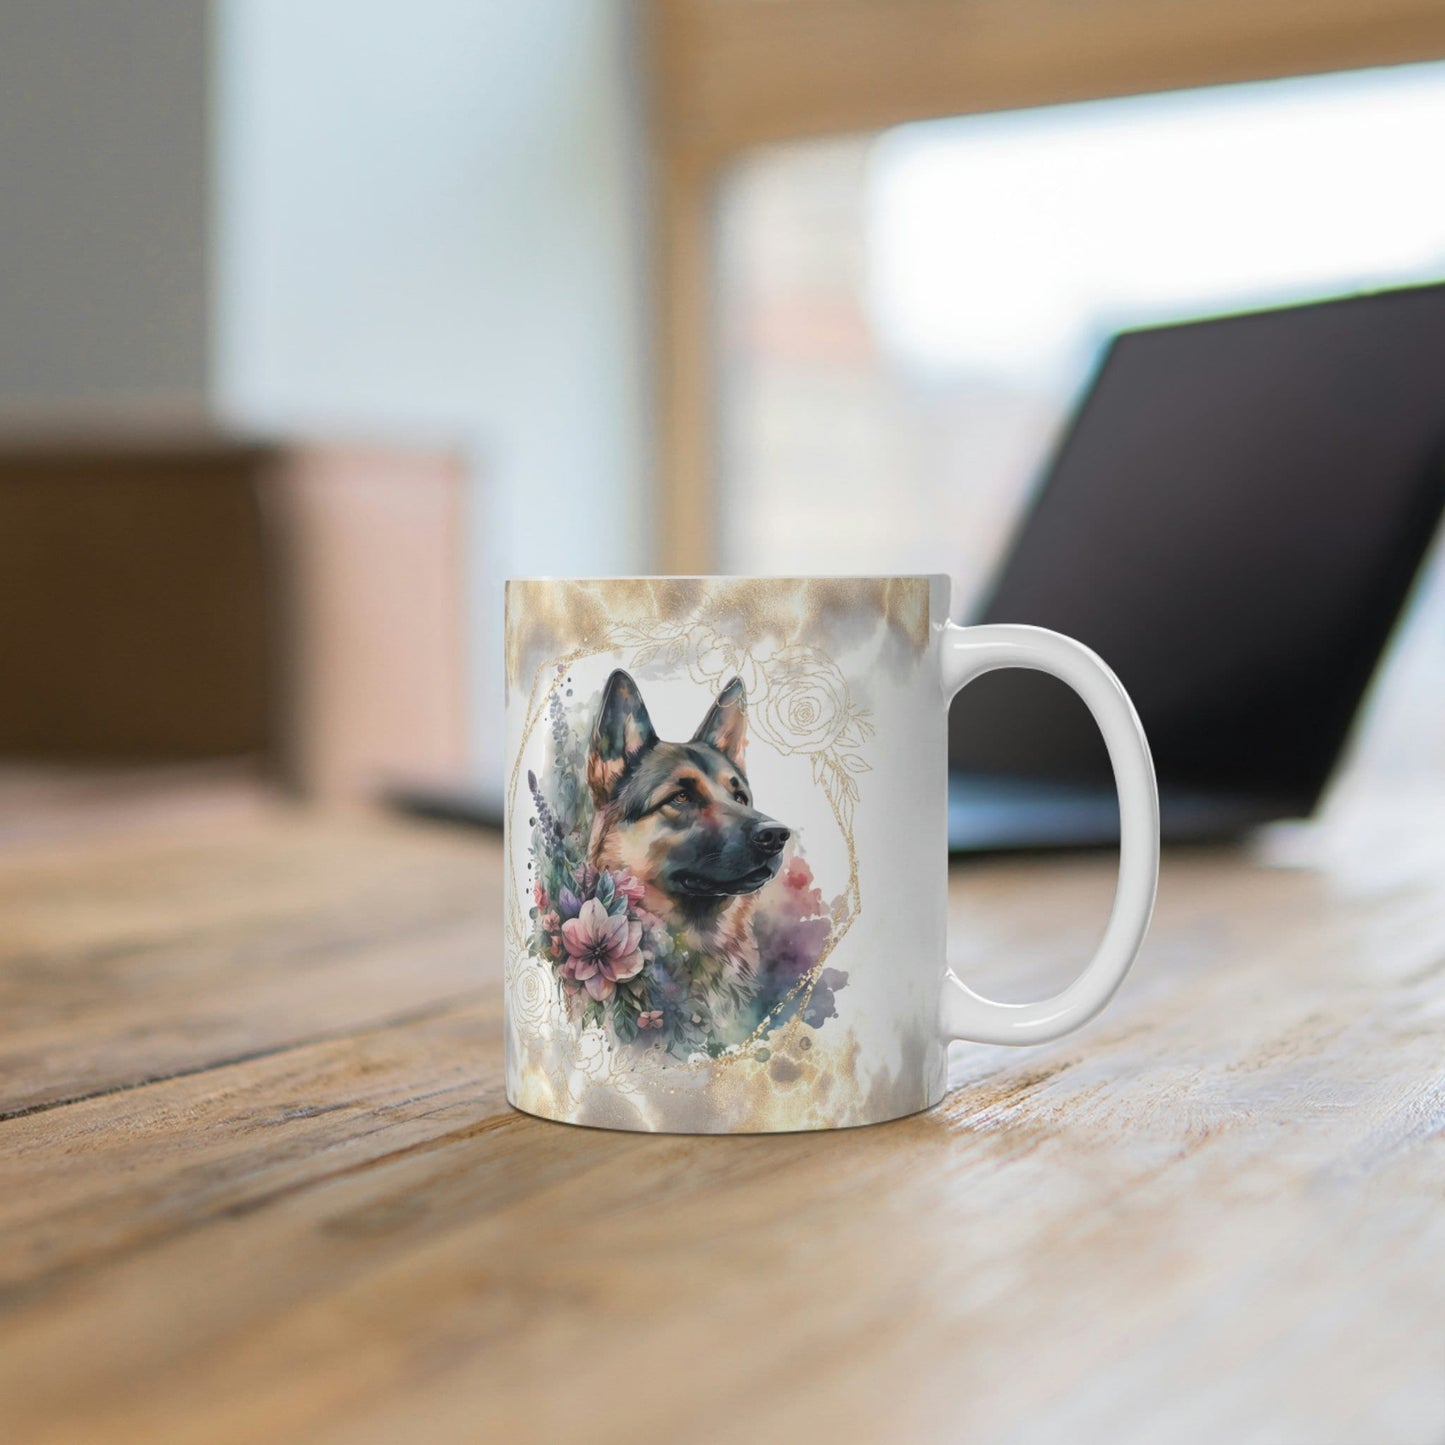 German Shepherd Appreciation Mug, Coffee And Dog Lover's Premium Ceramic Cup, Alsatian Collectable Mug, Caffeine Addicts Present, Beautiful